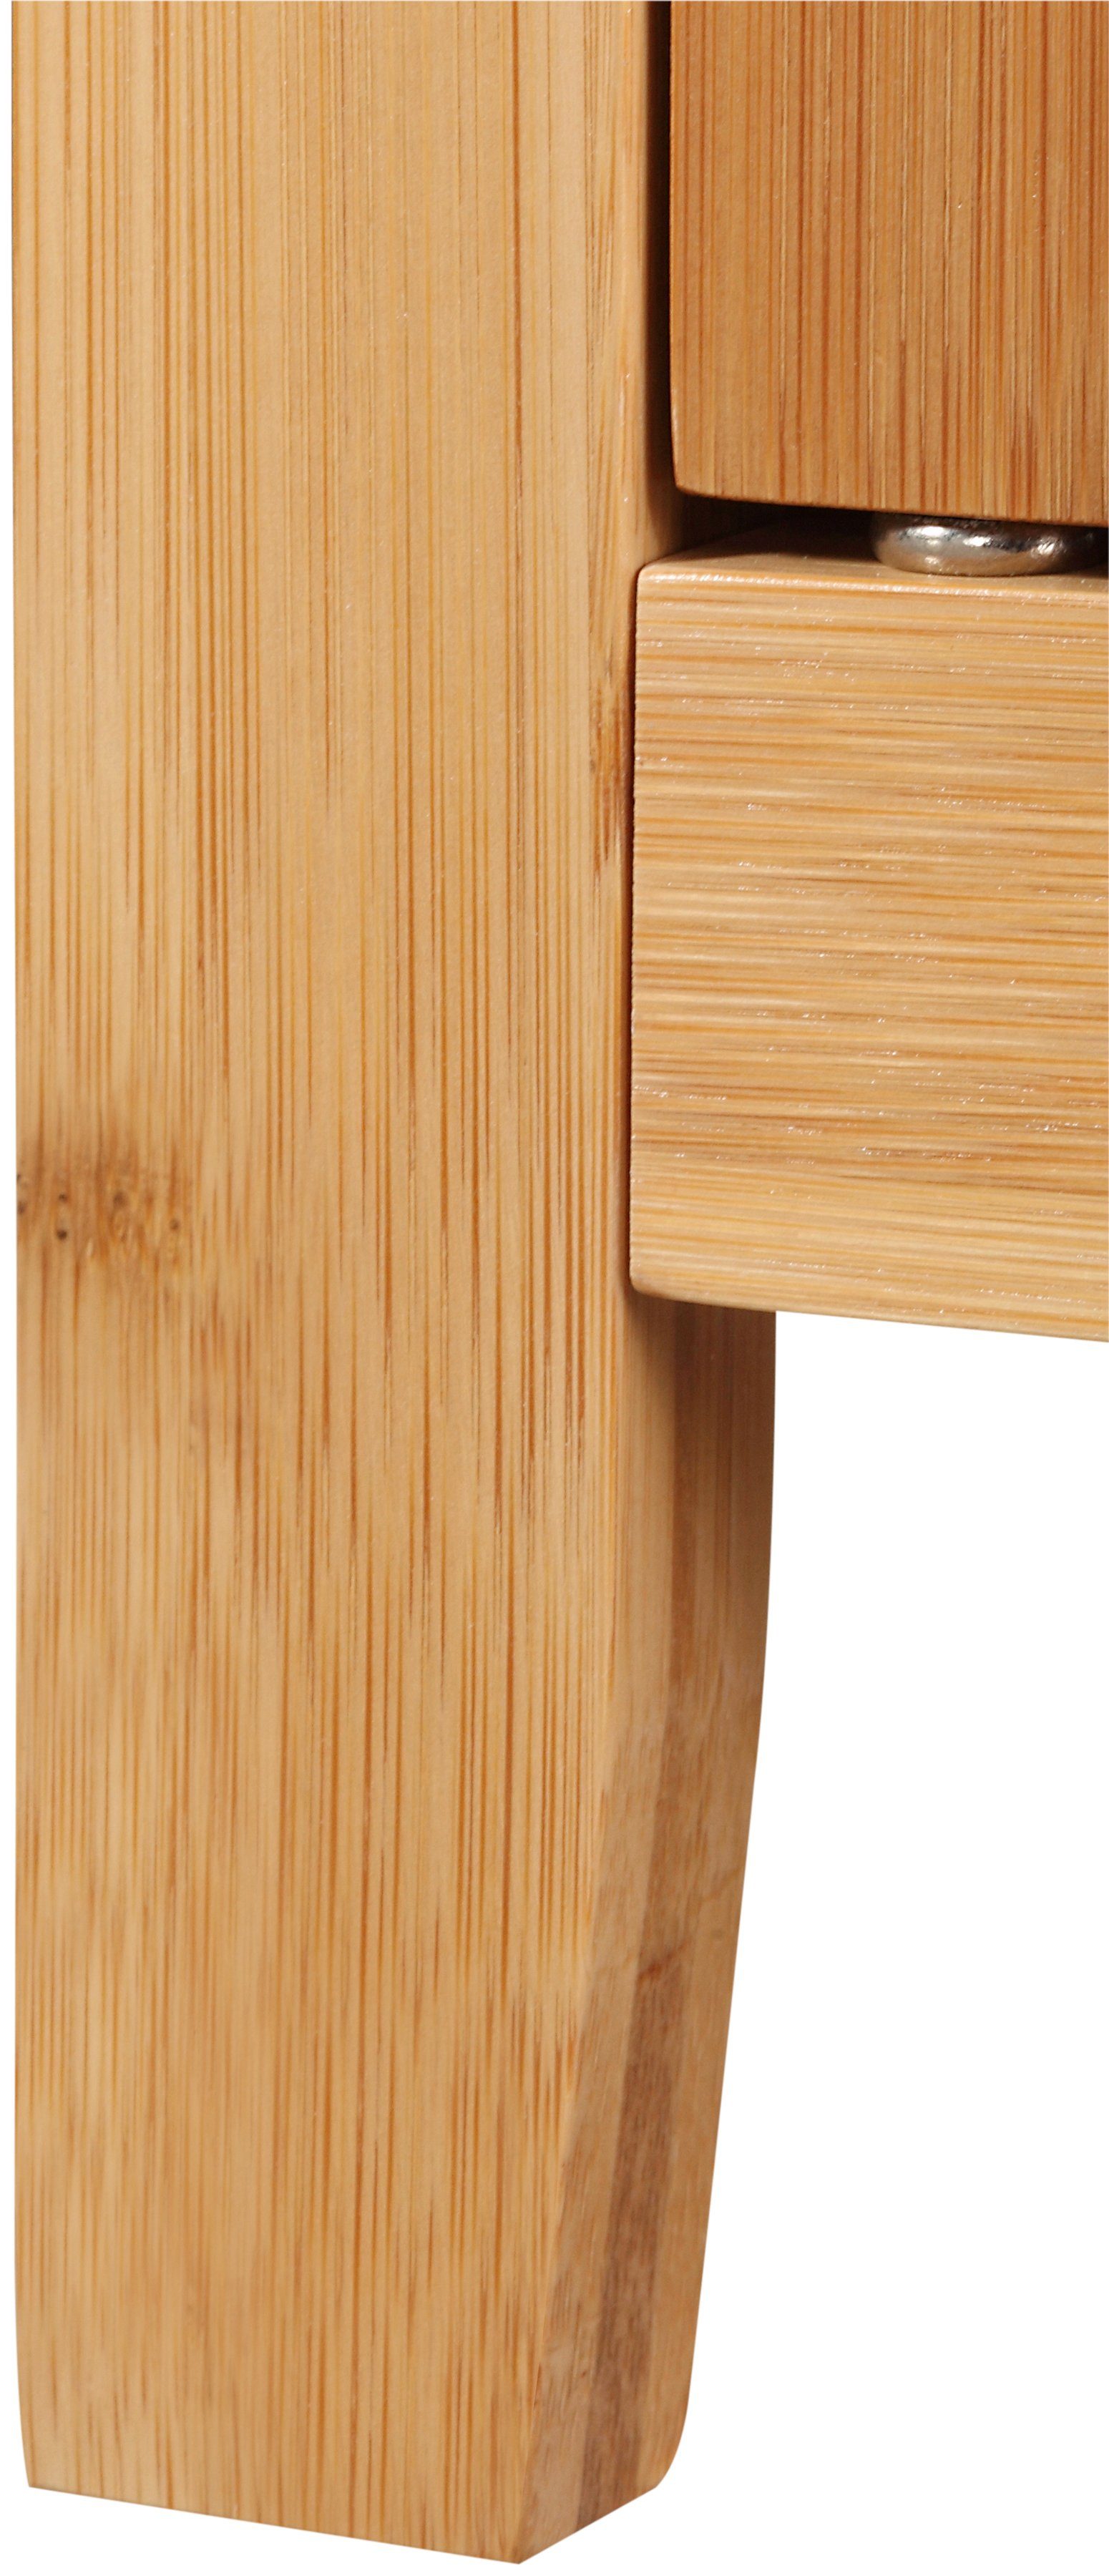 Bambus, Badezimmerschrank Bambus B: Hochschrank 40cm, mit geschlossenen & New offenen welltime Fächern